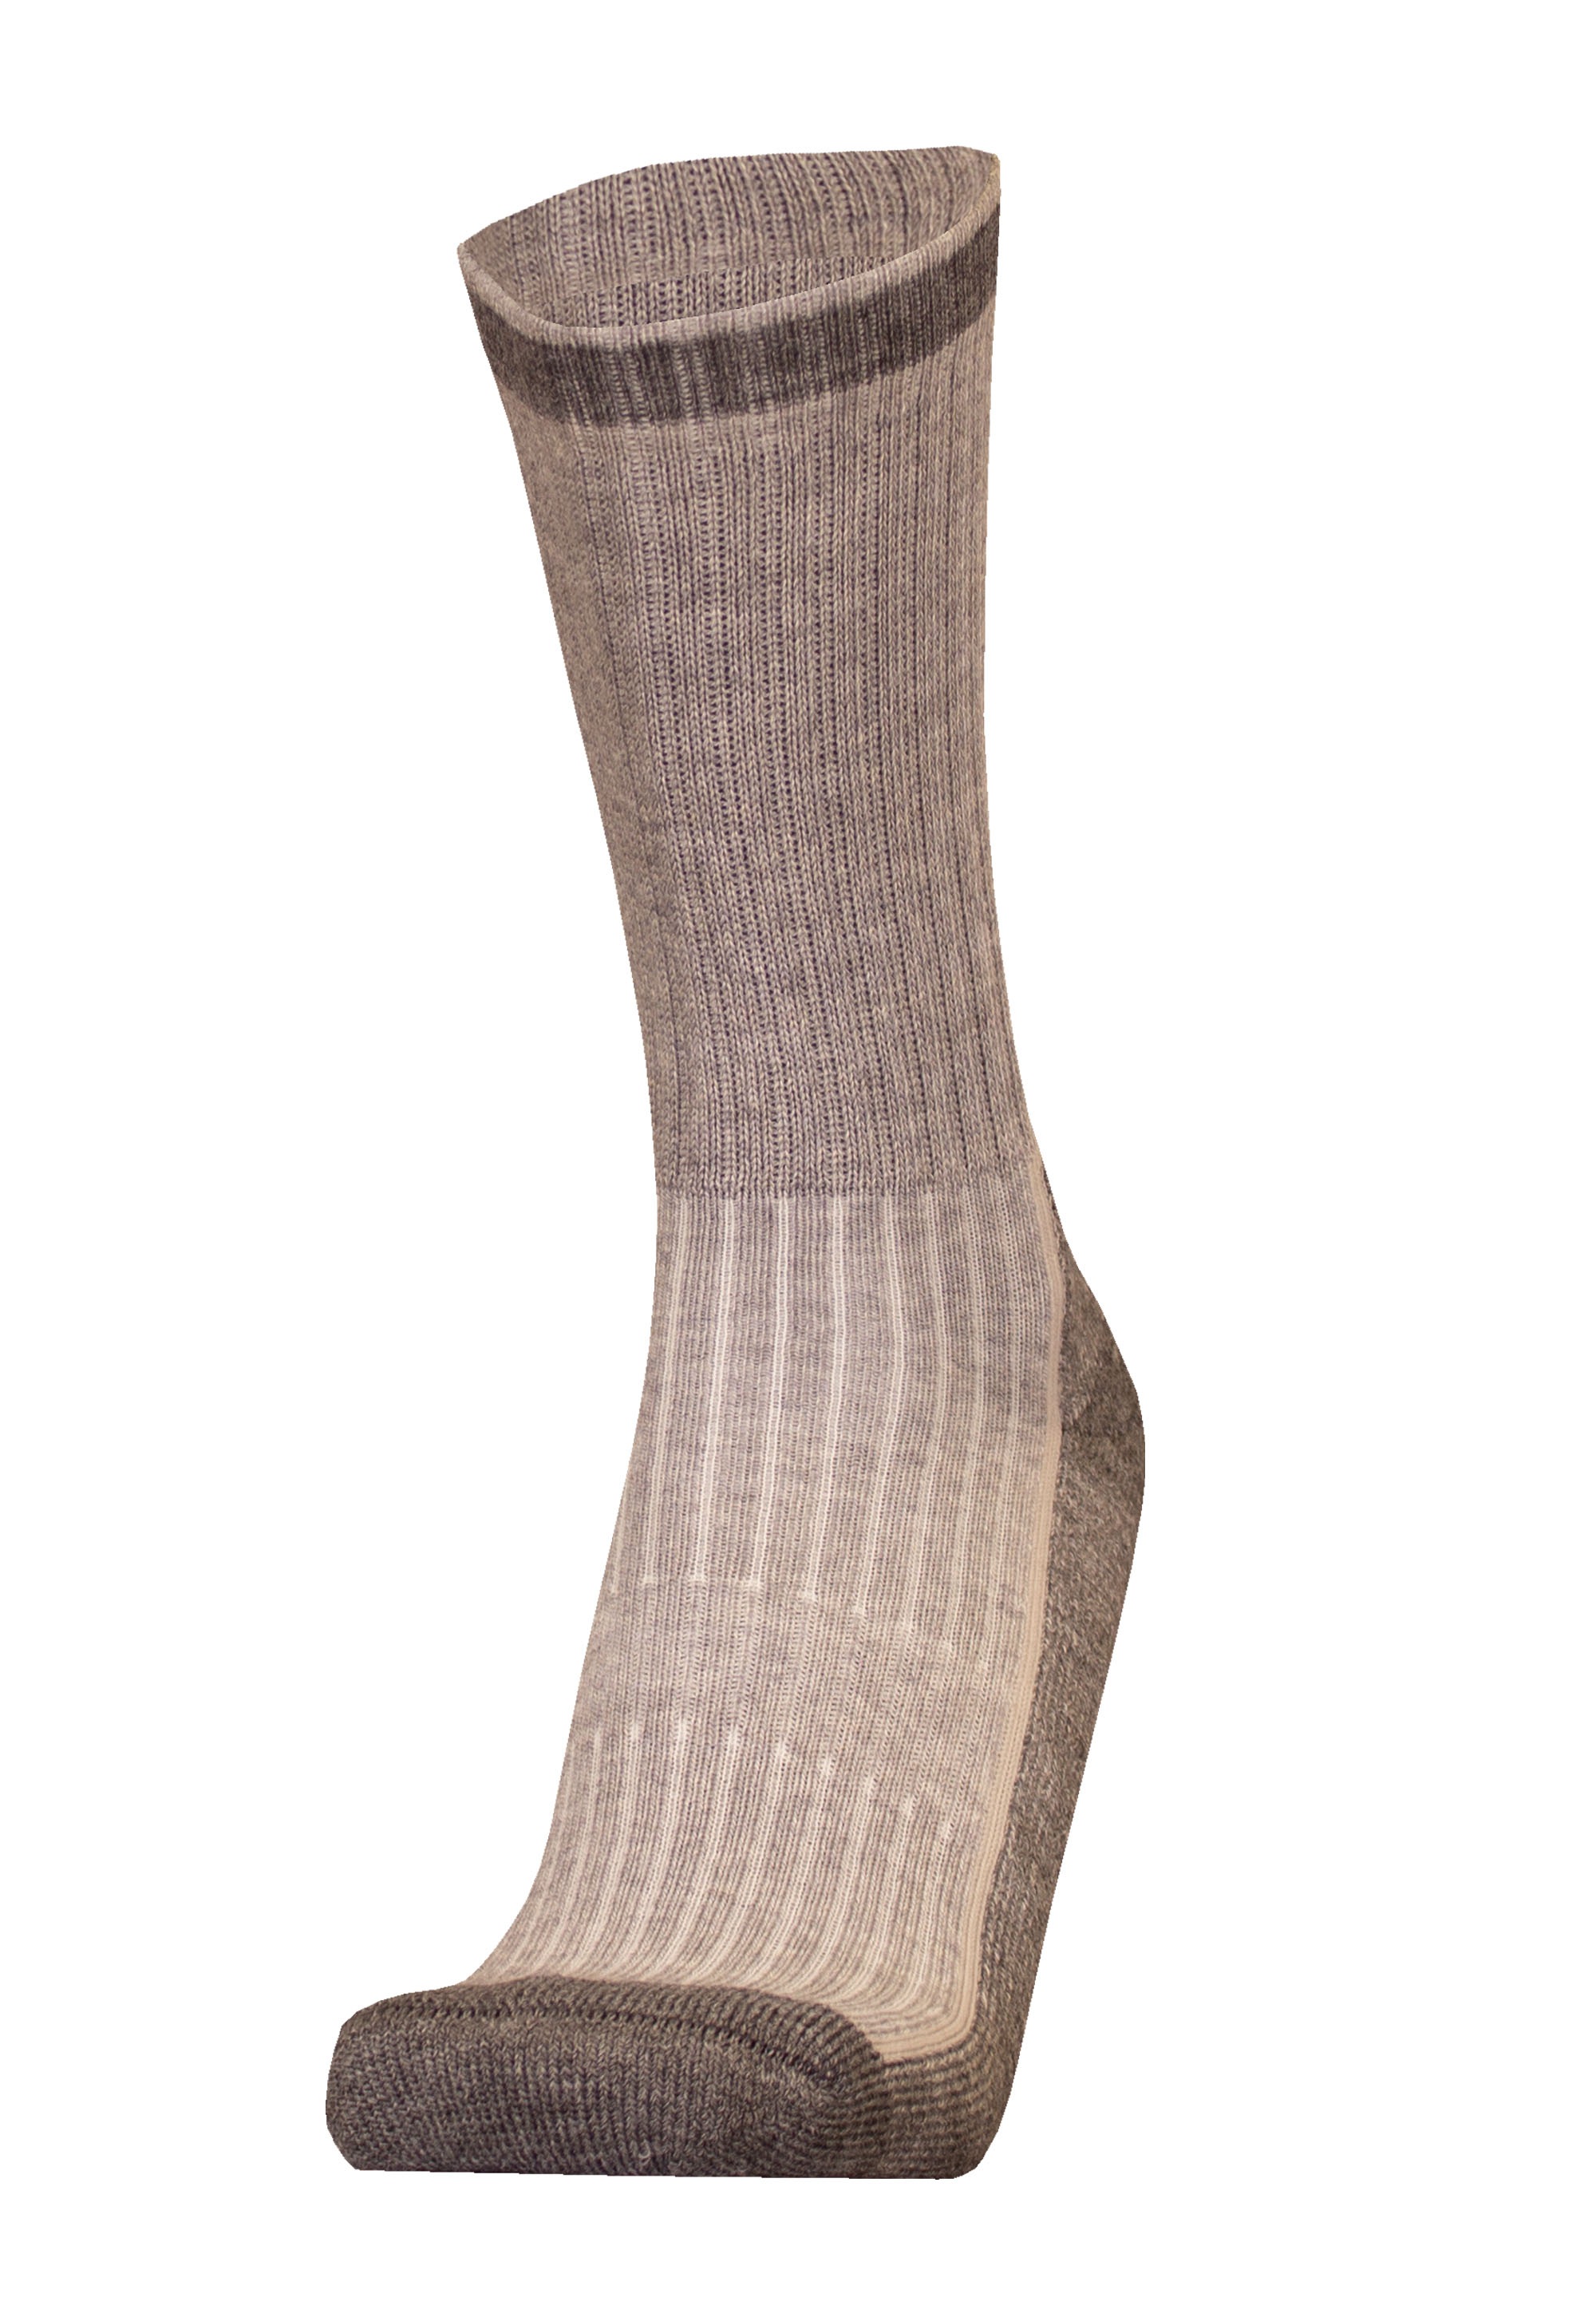 UphillSport Socken »HONKA«, (1 Paar), mit elastischer Flextech-Struktur